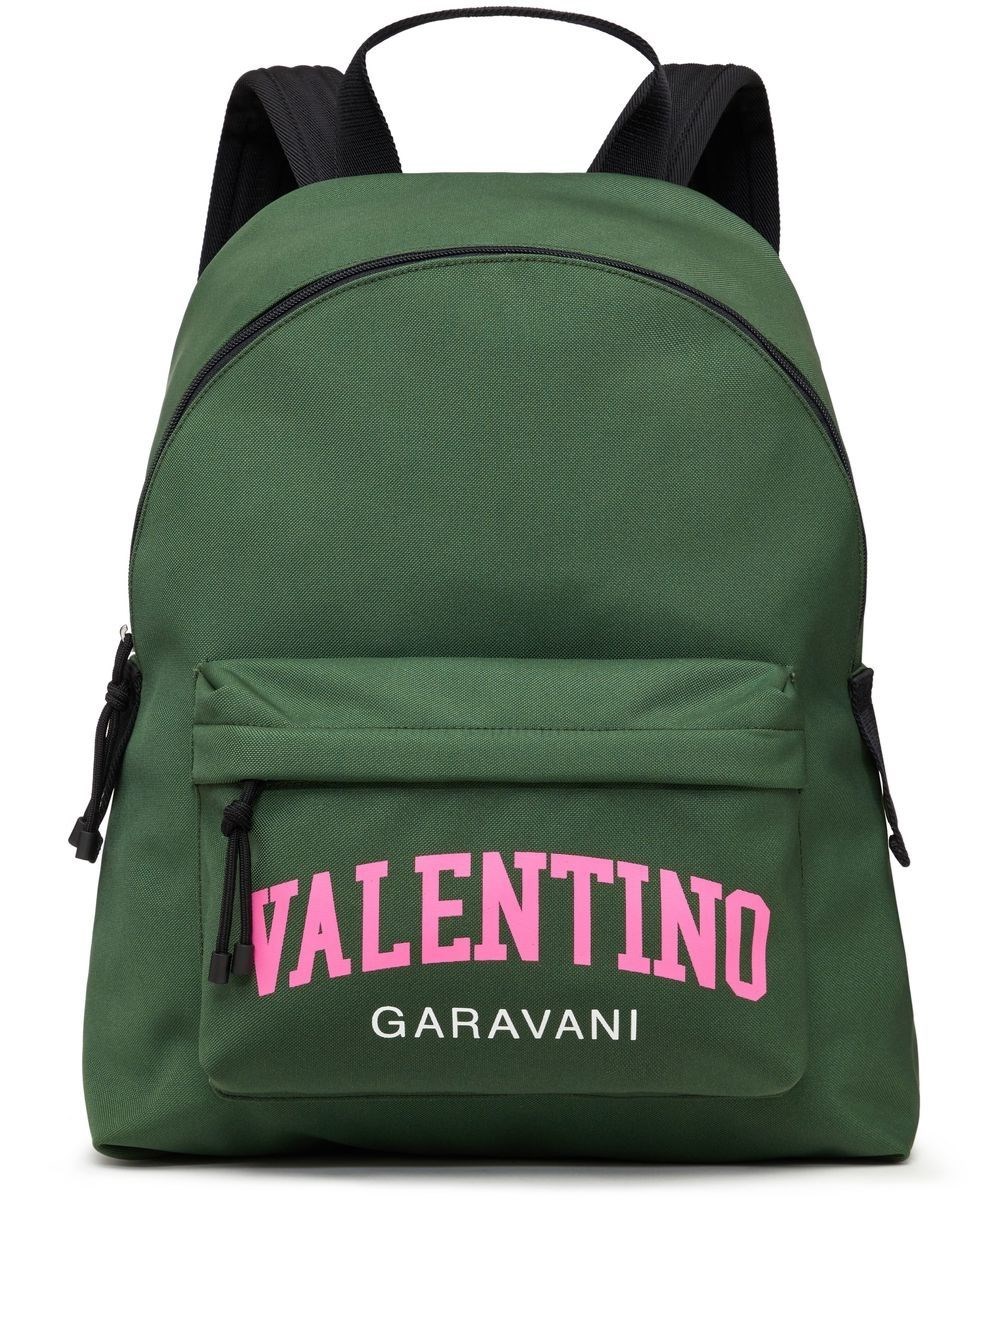 Valentino Garavani Backpack In Green